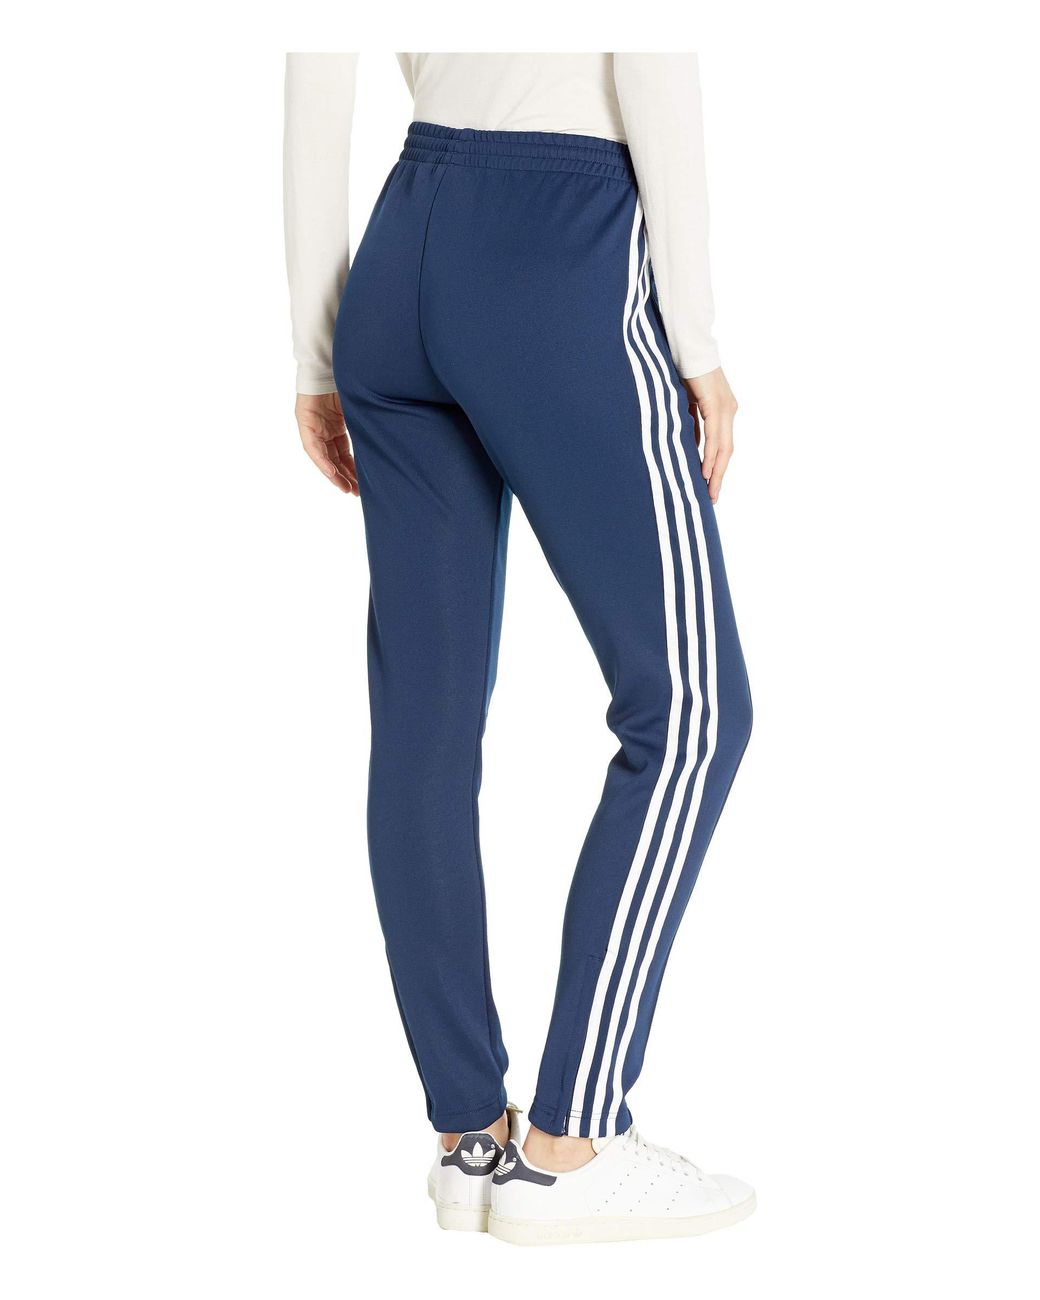 adidas Originals Sst Track Pants (dark Blue) Women's Workout | Lyst